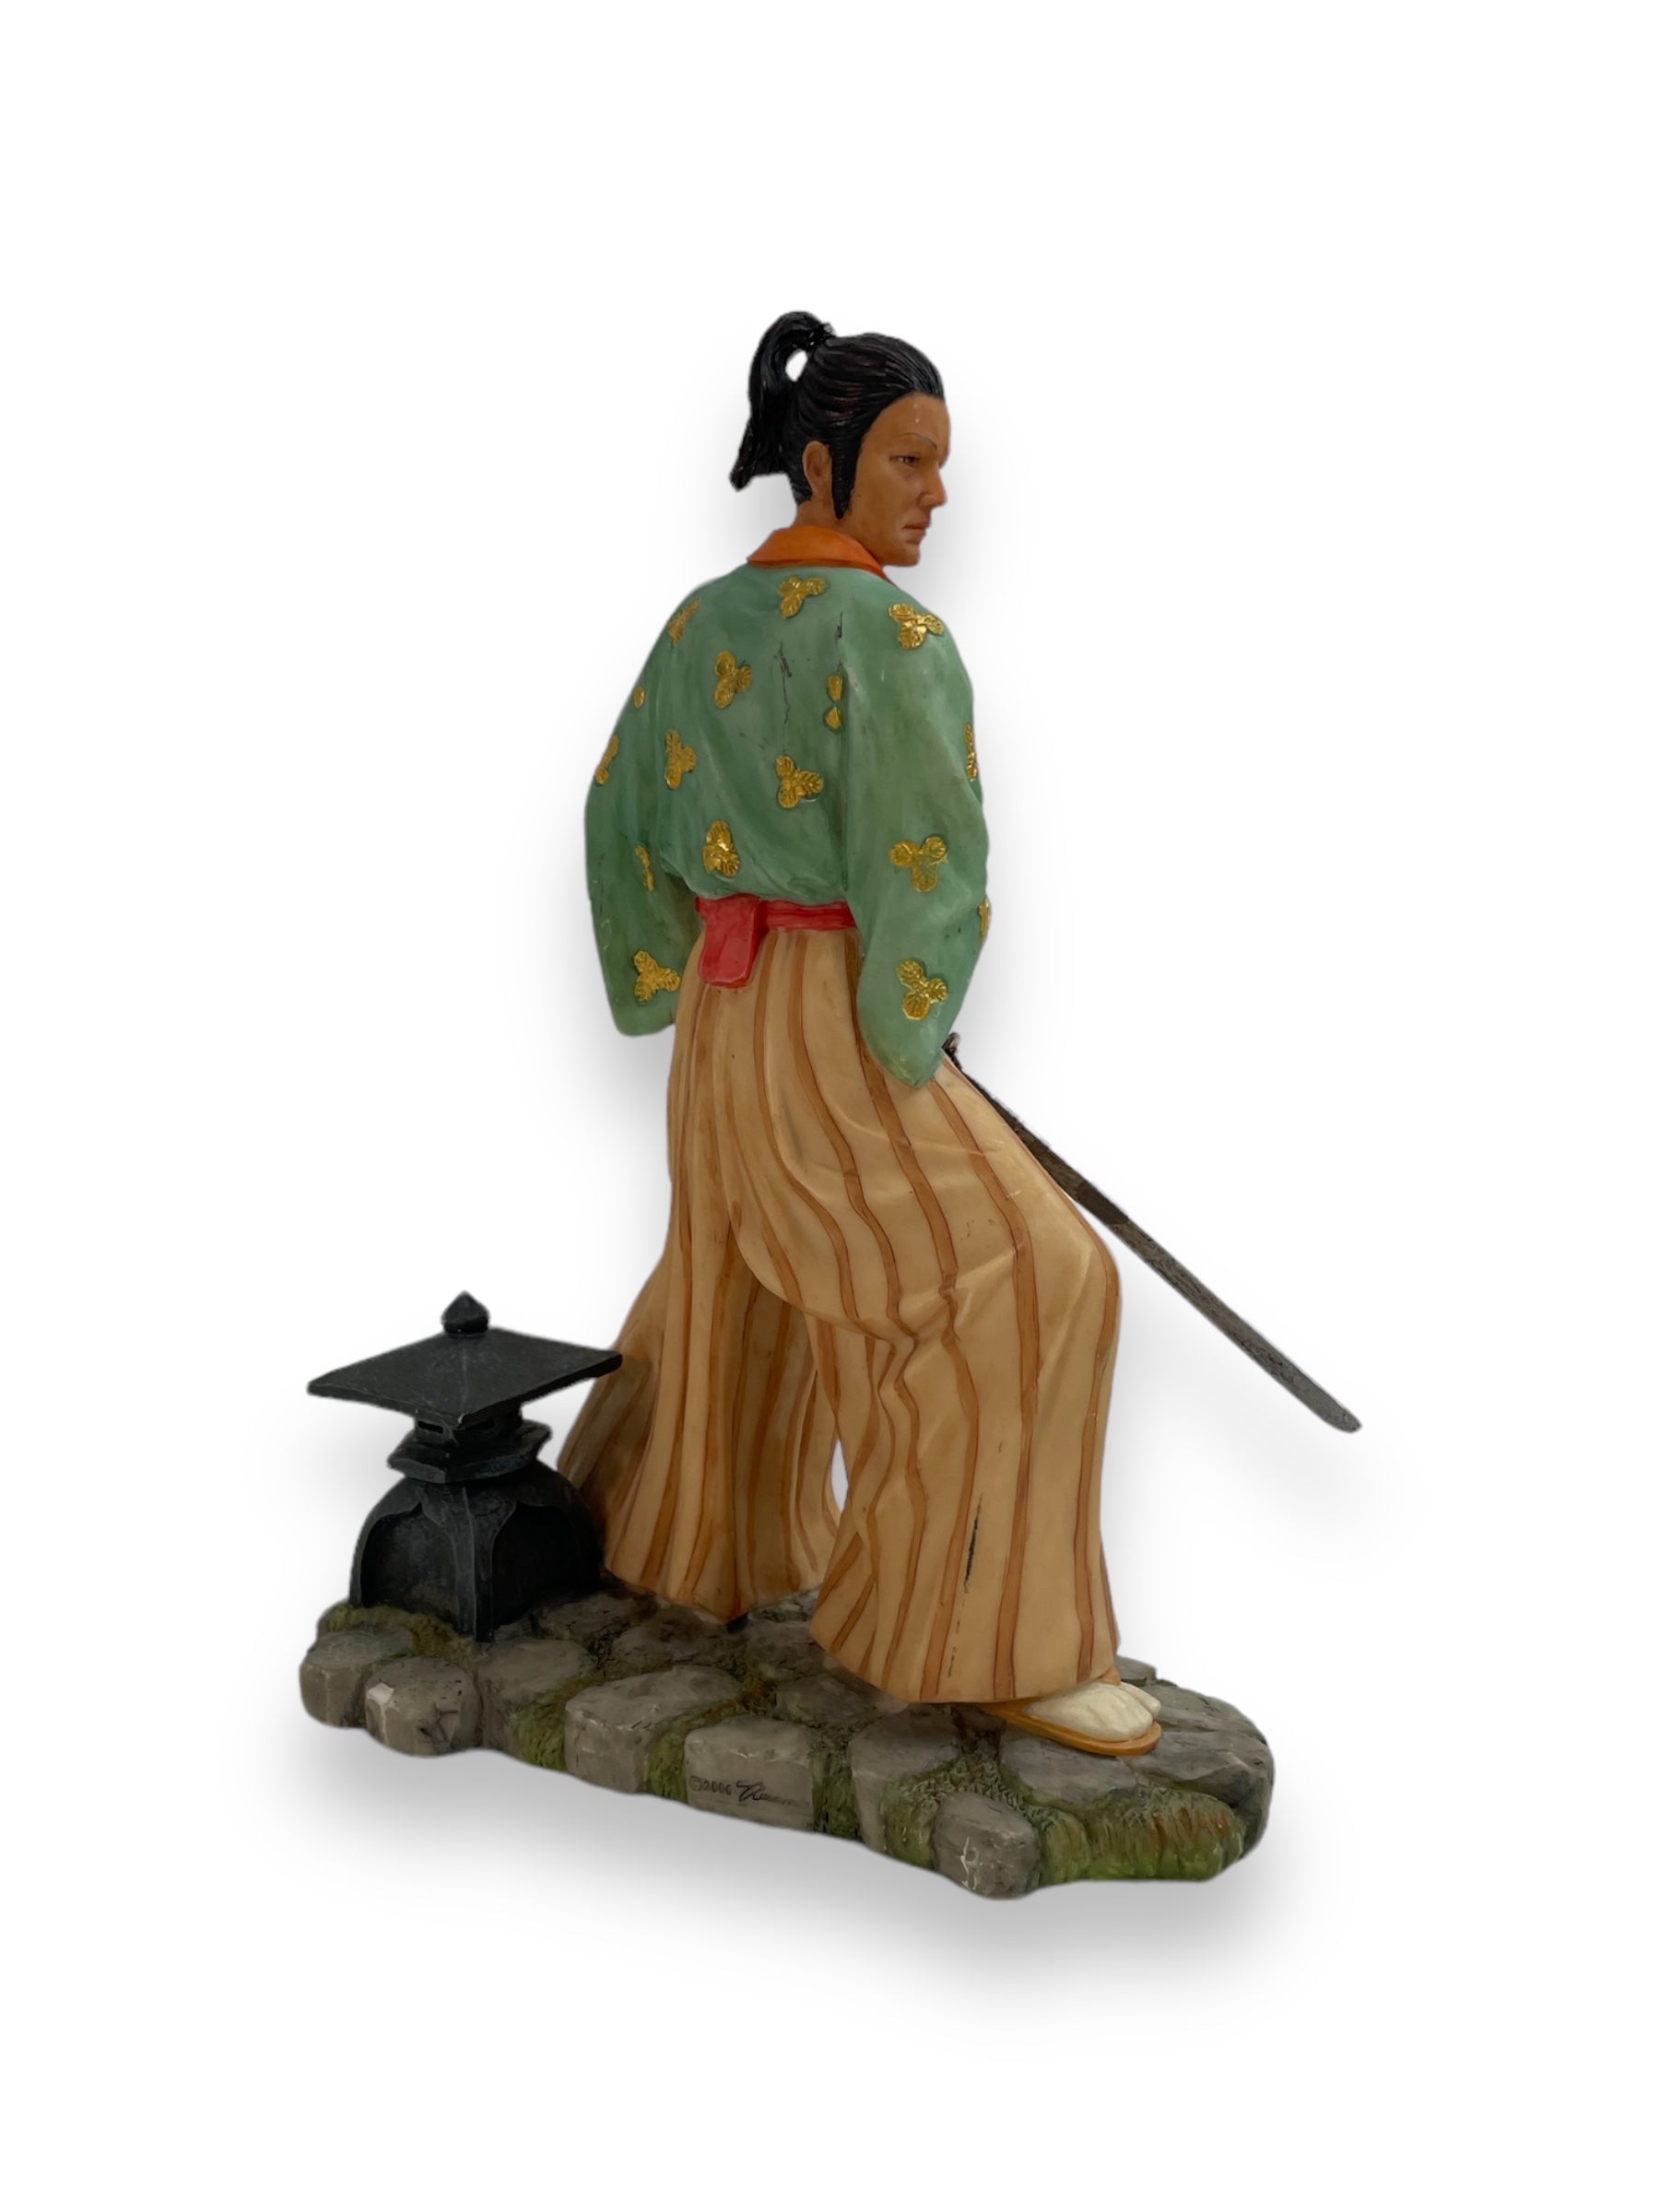 Japanese Samurai Figurine in Traditional Dress with Katana